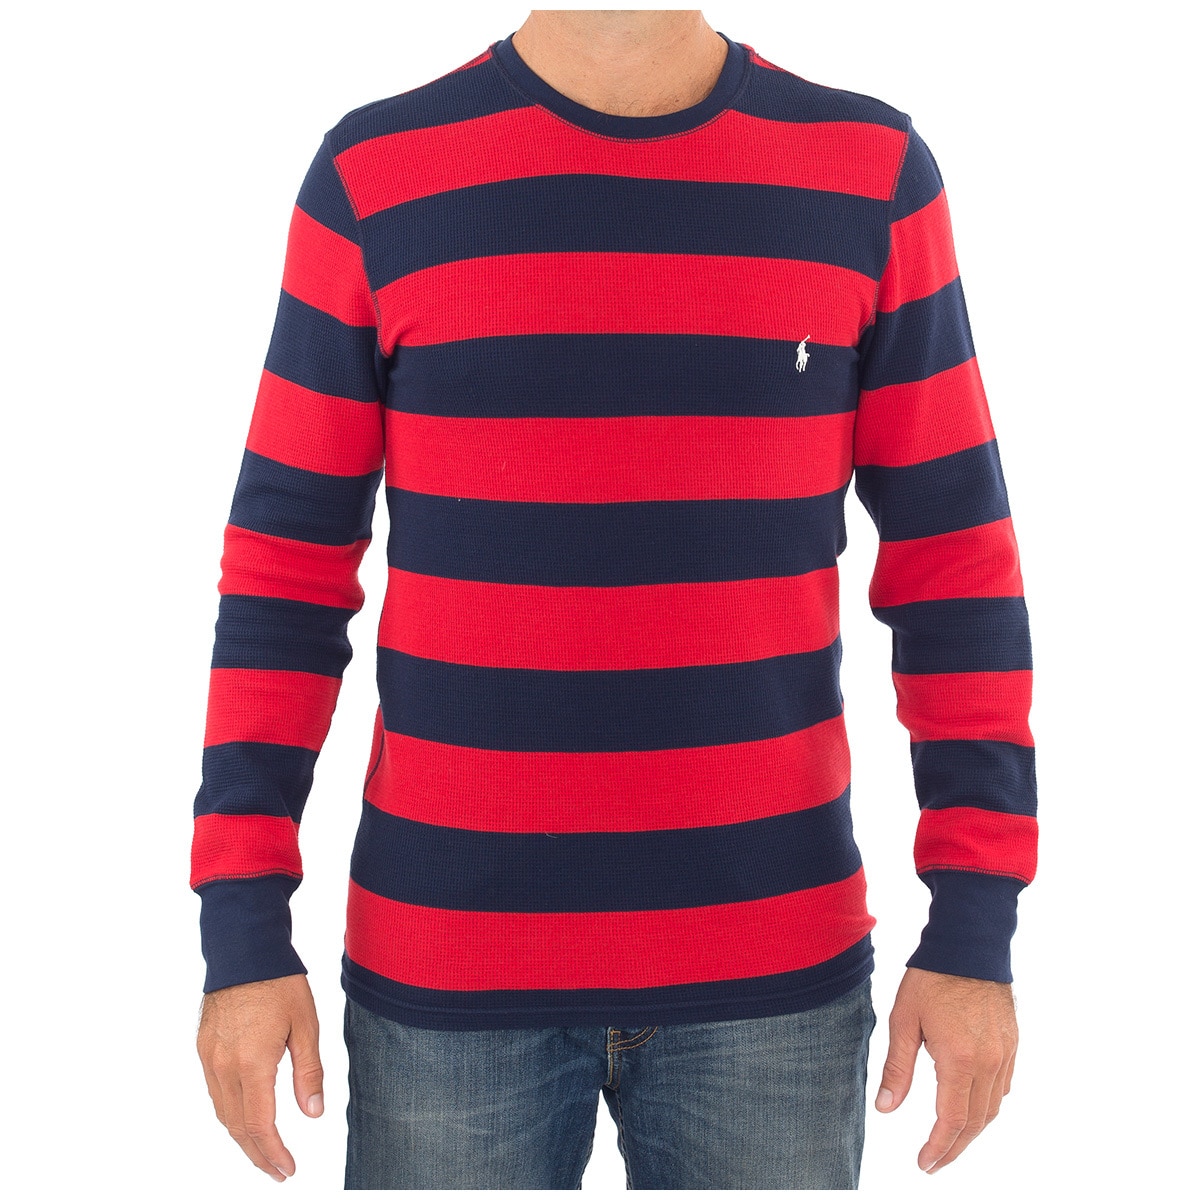 Ralph Lauren Long Sleeve Polo - Red Stripe